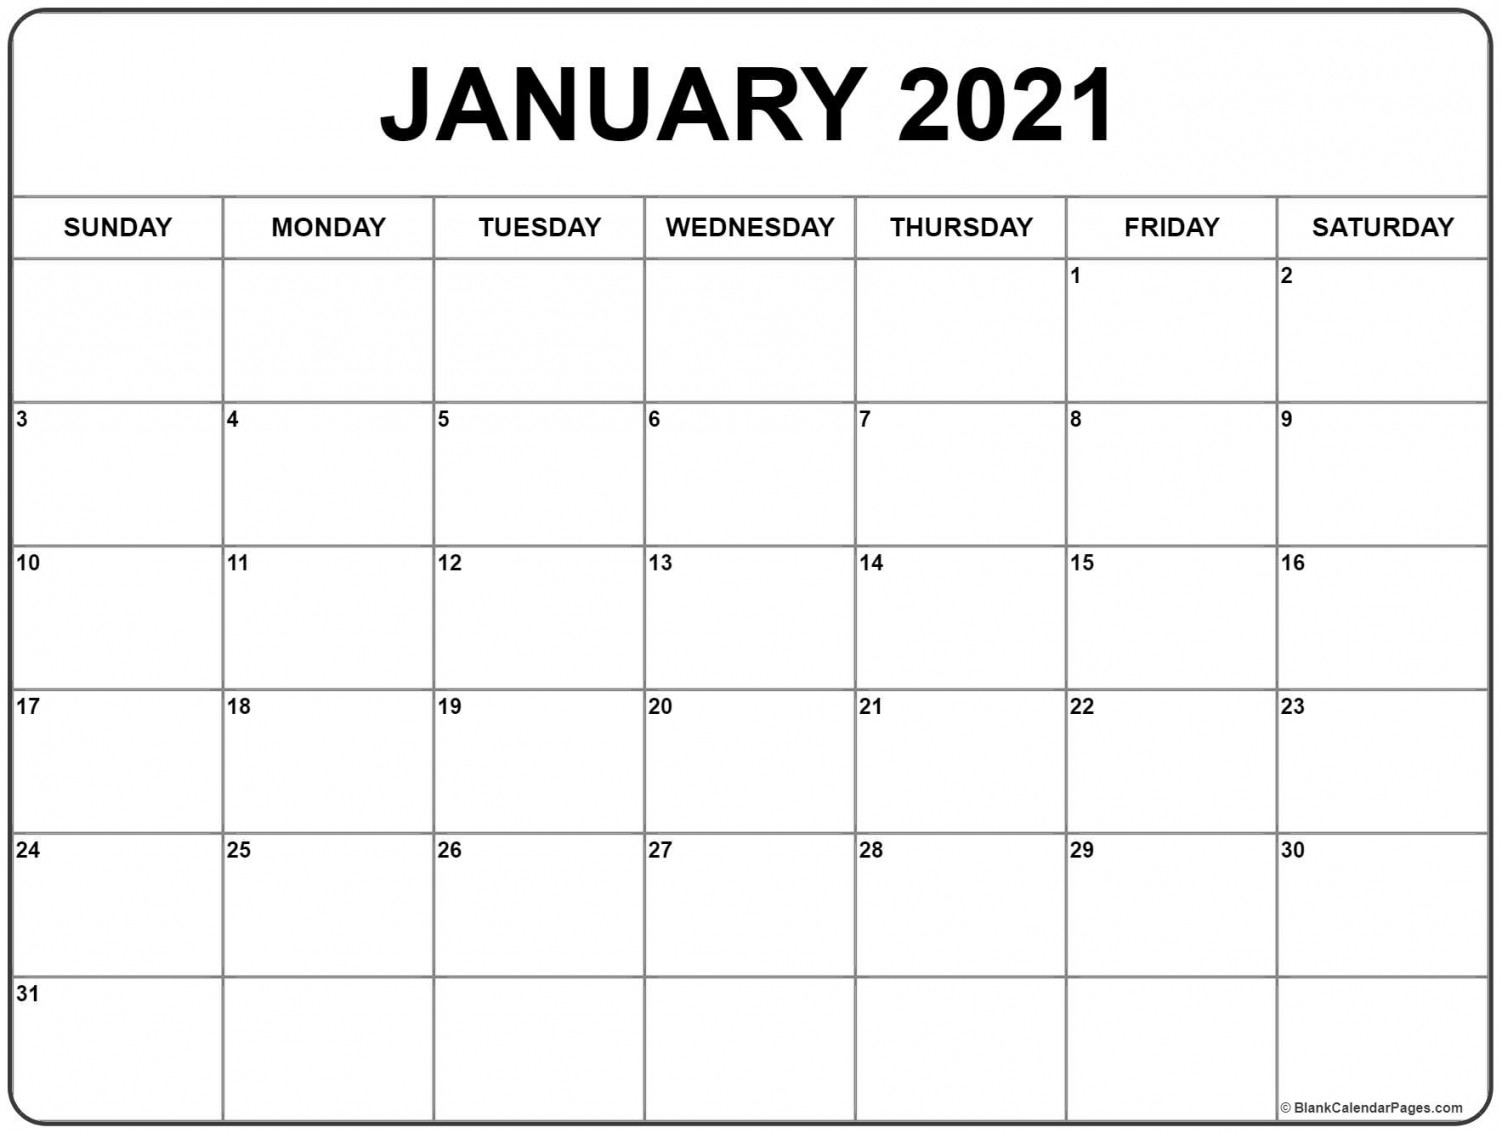 January 2021 Calendar Printable | Free Letter Templates-Free Printable Monthly Calendar January 2021